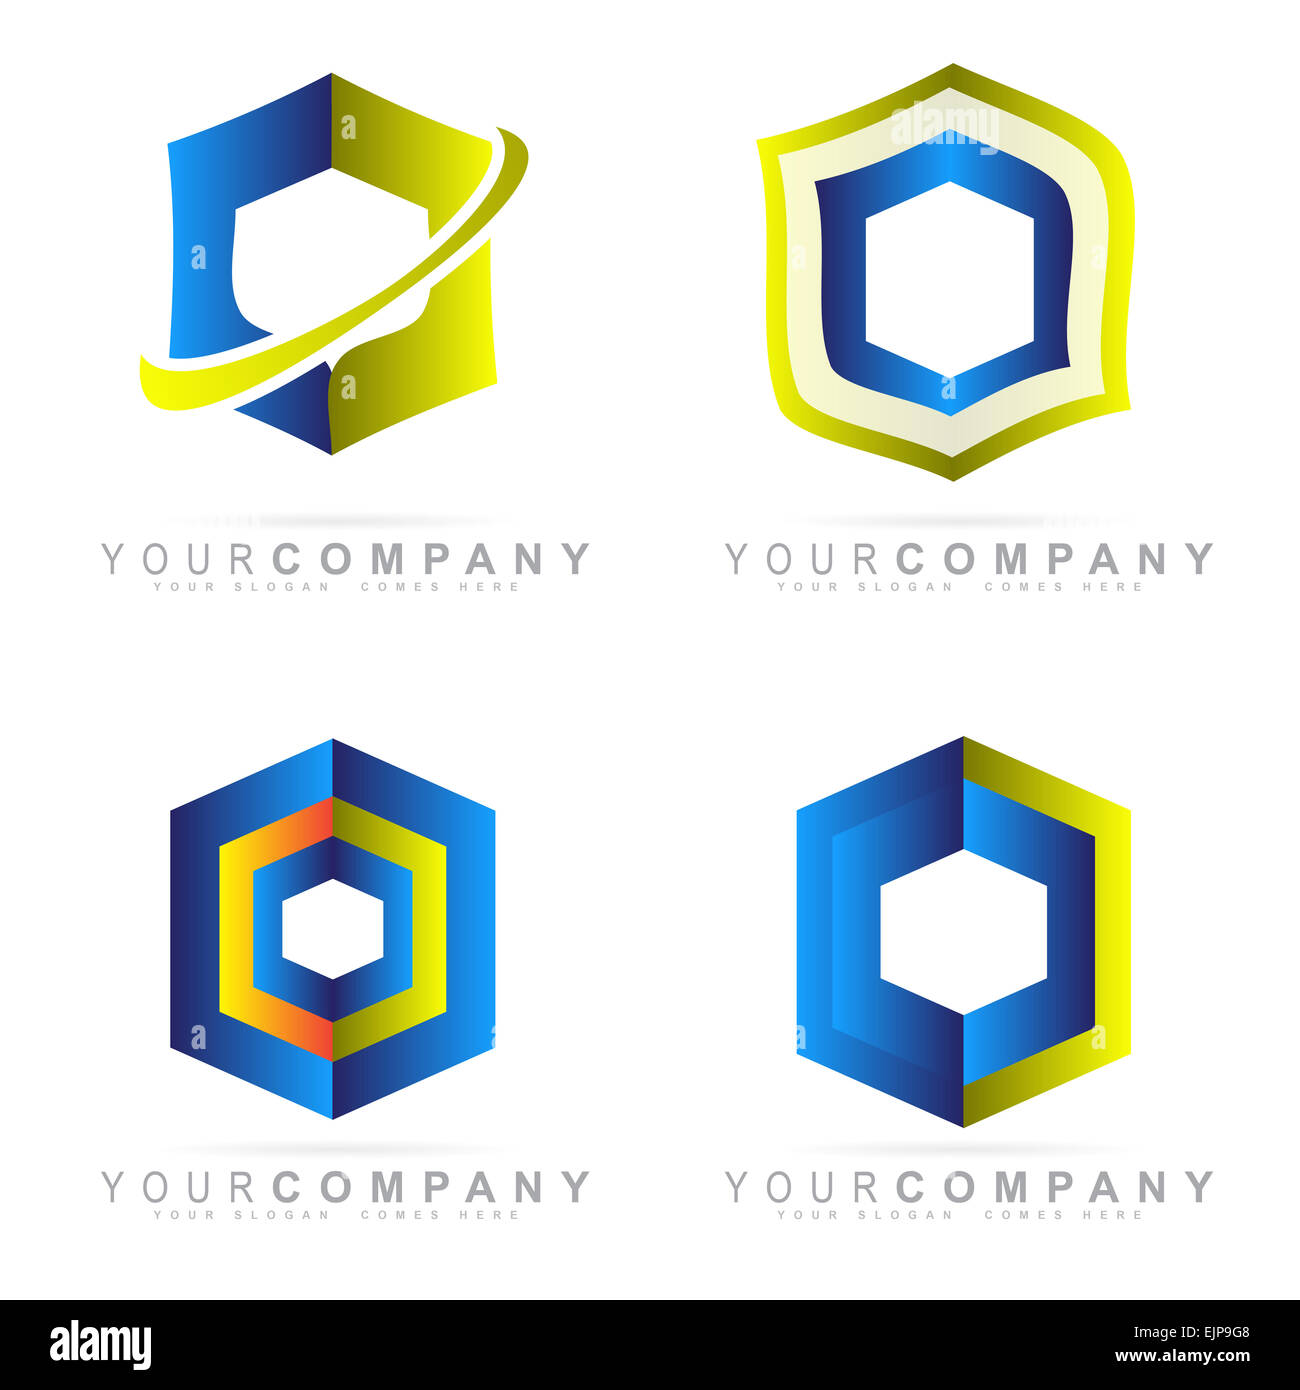 Kreative Vektor Vorlage Sechseck Firmenkundengeschäft Logo Sets Stockfoto